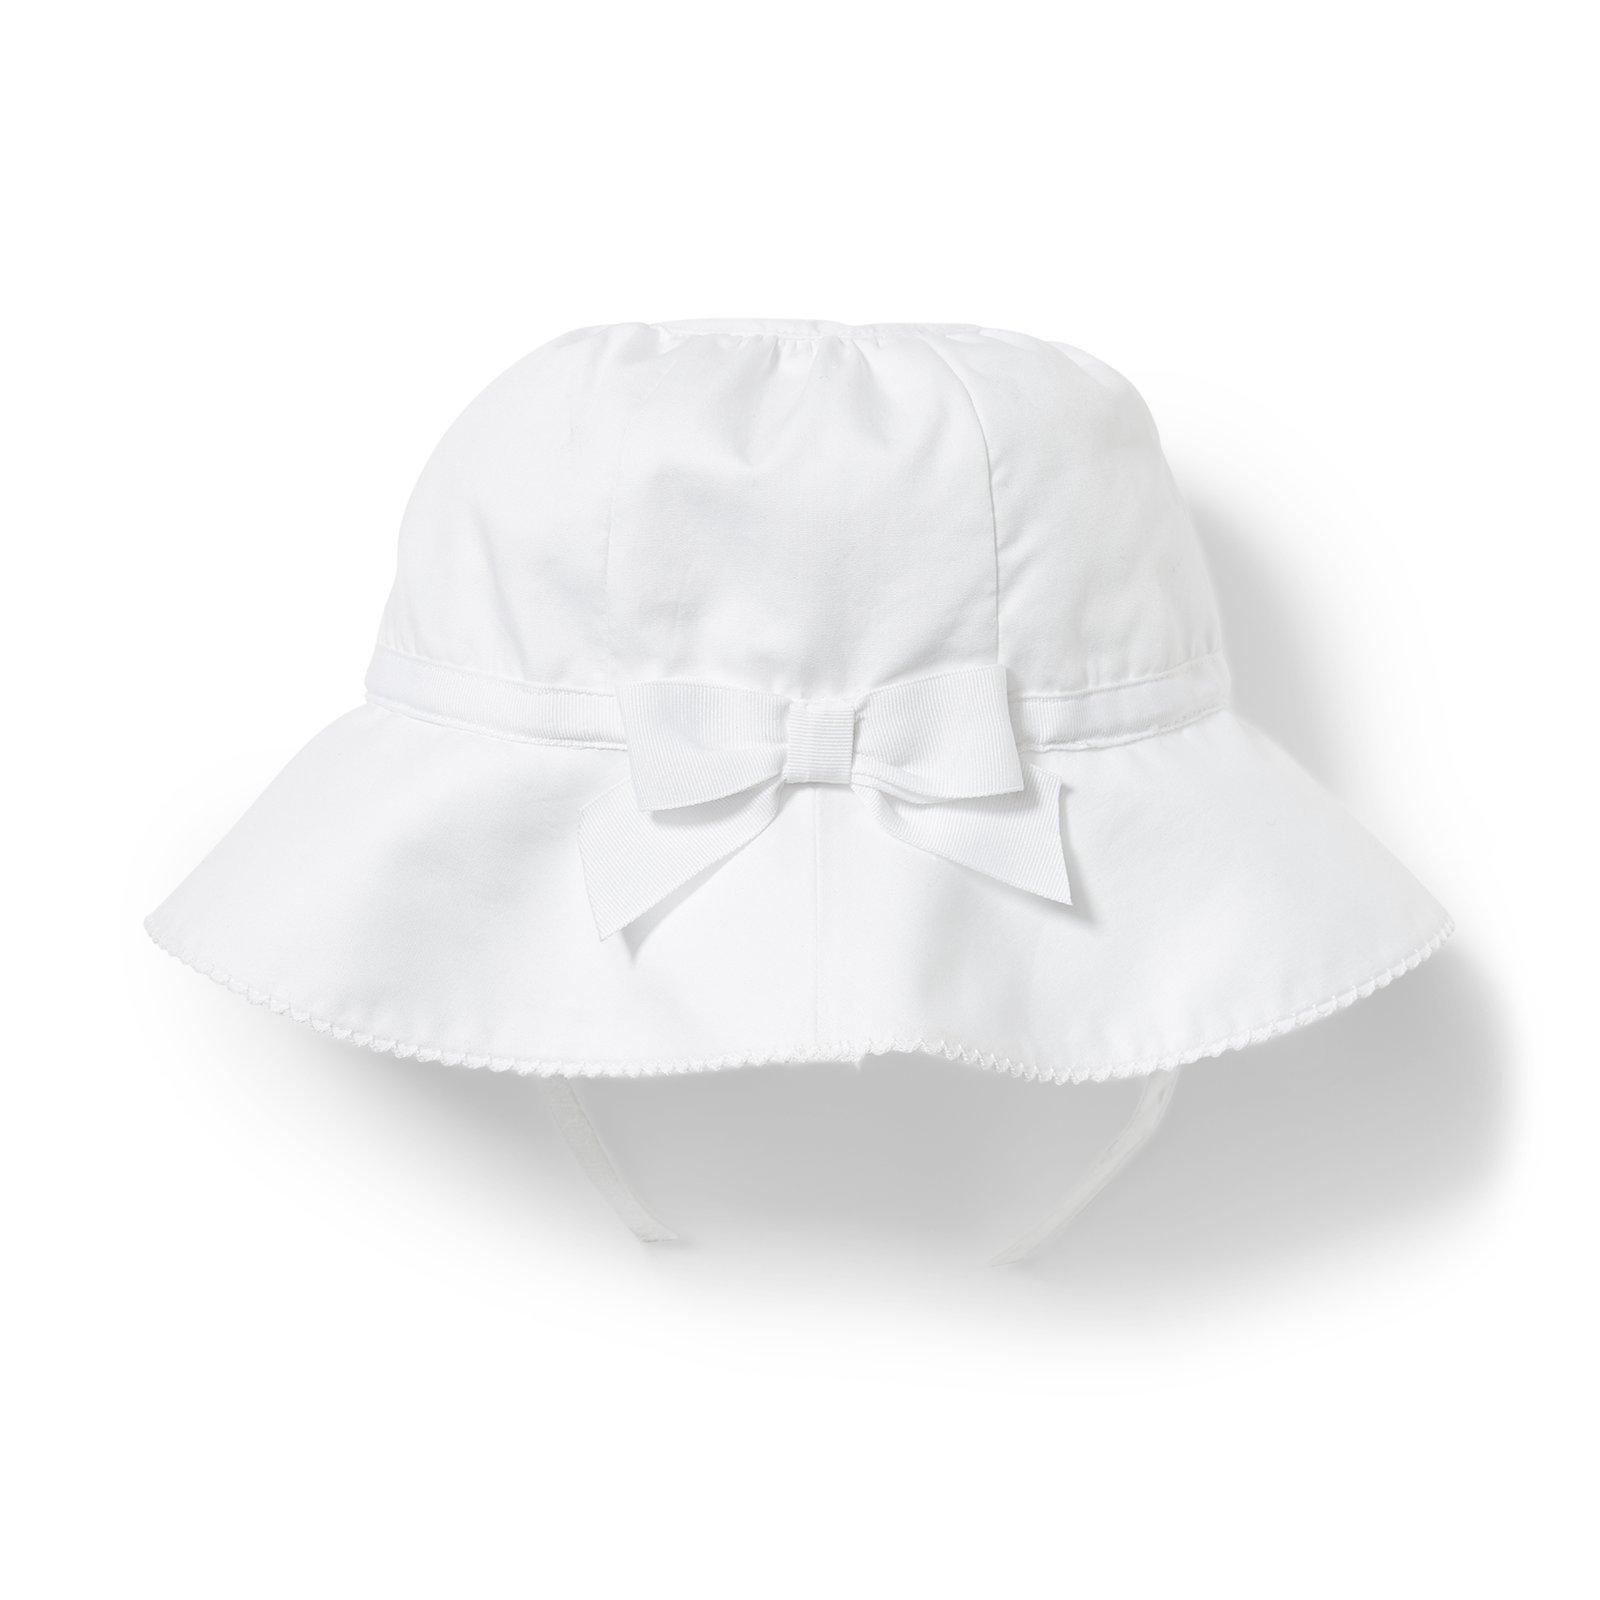 Newborn White Poplin Sun Hat by Janie and Jack